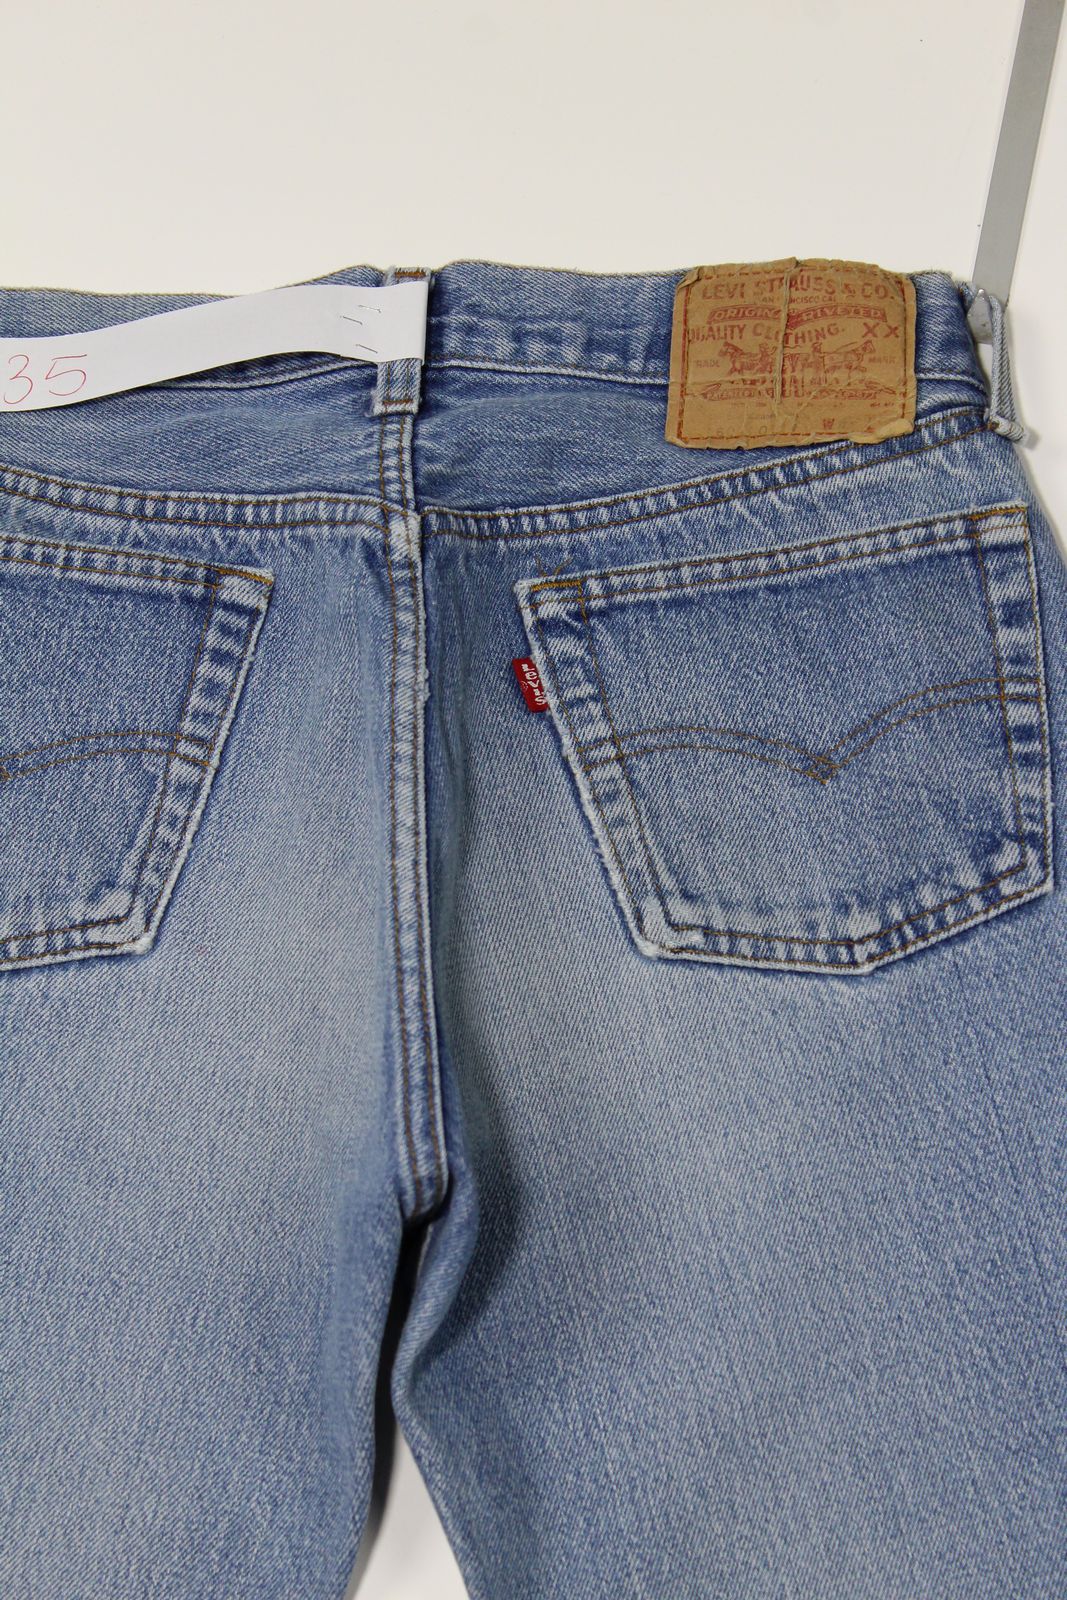 Levi's 501 Denim W30 L34 Made In USA Jeans Vintage